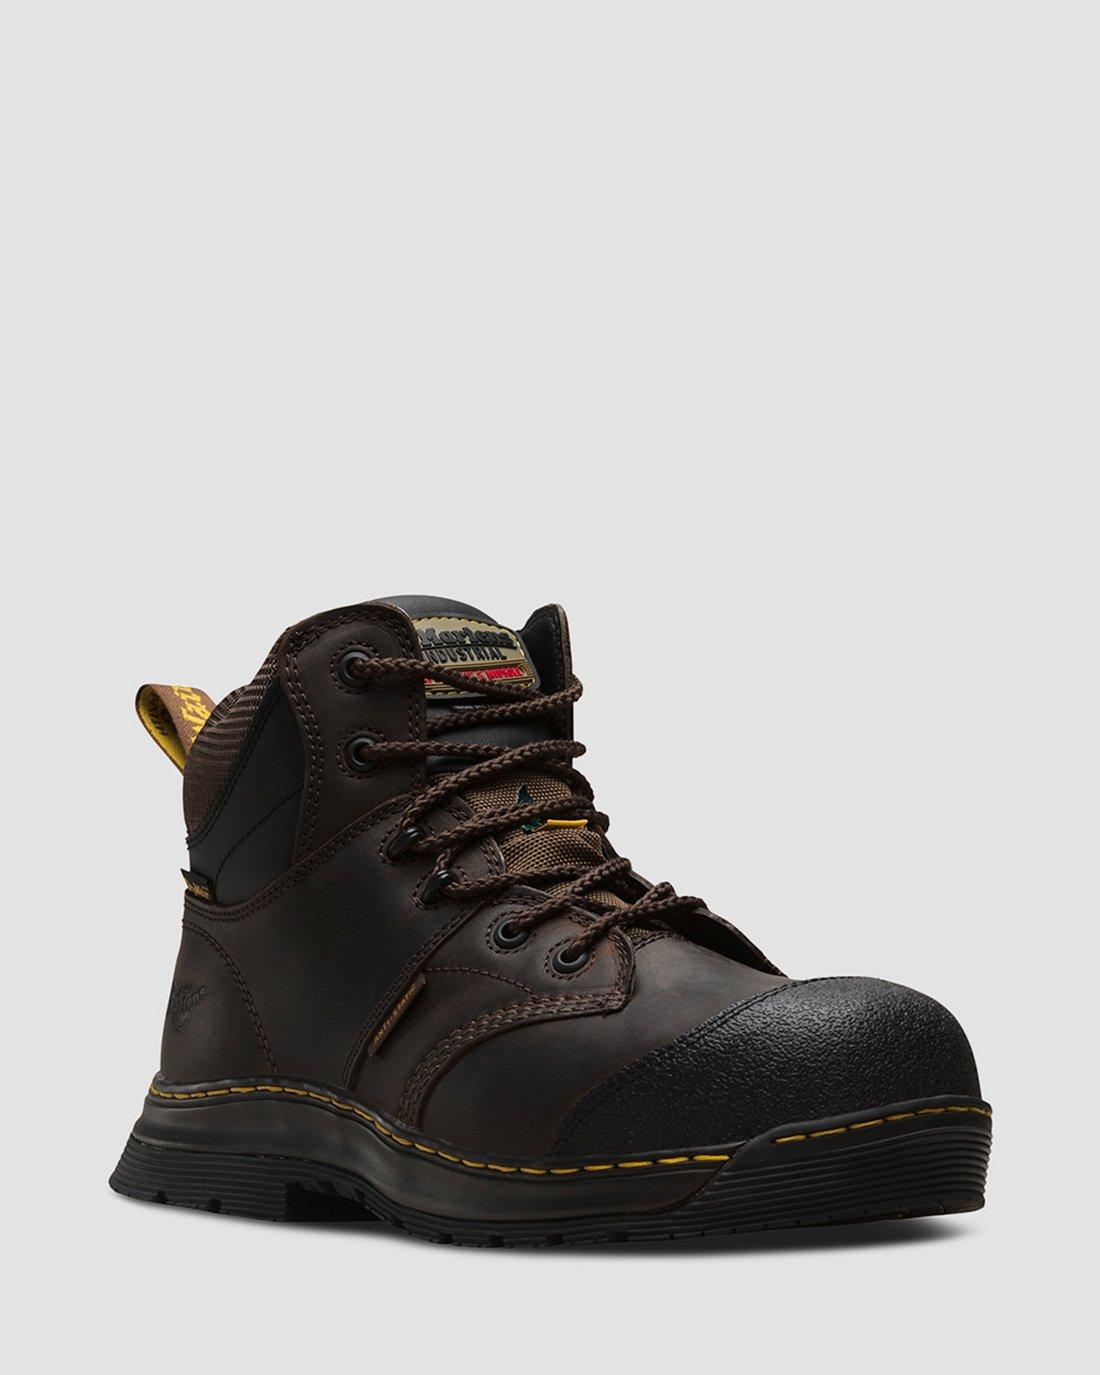 Surge Waterproof Boots in Dark Brown | Dr. Martens